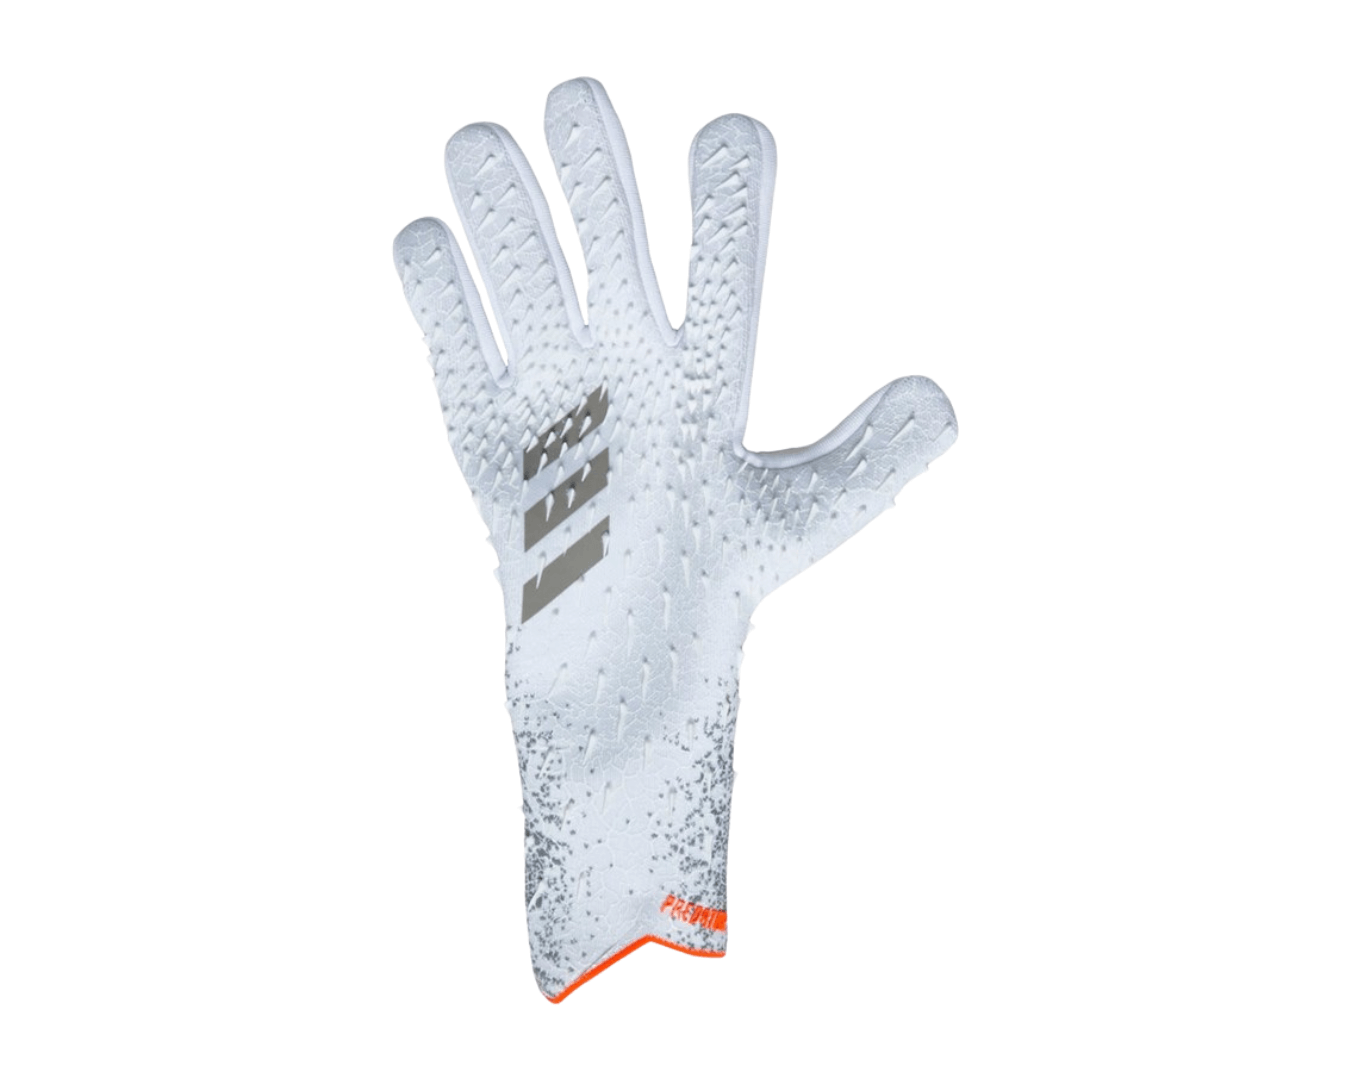 adidas PREDATOR GL PRO PC Soccer Goalkeeper Gloves